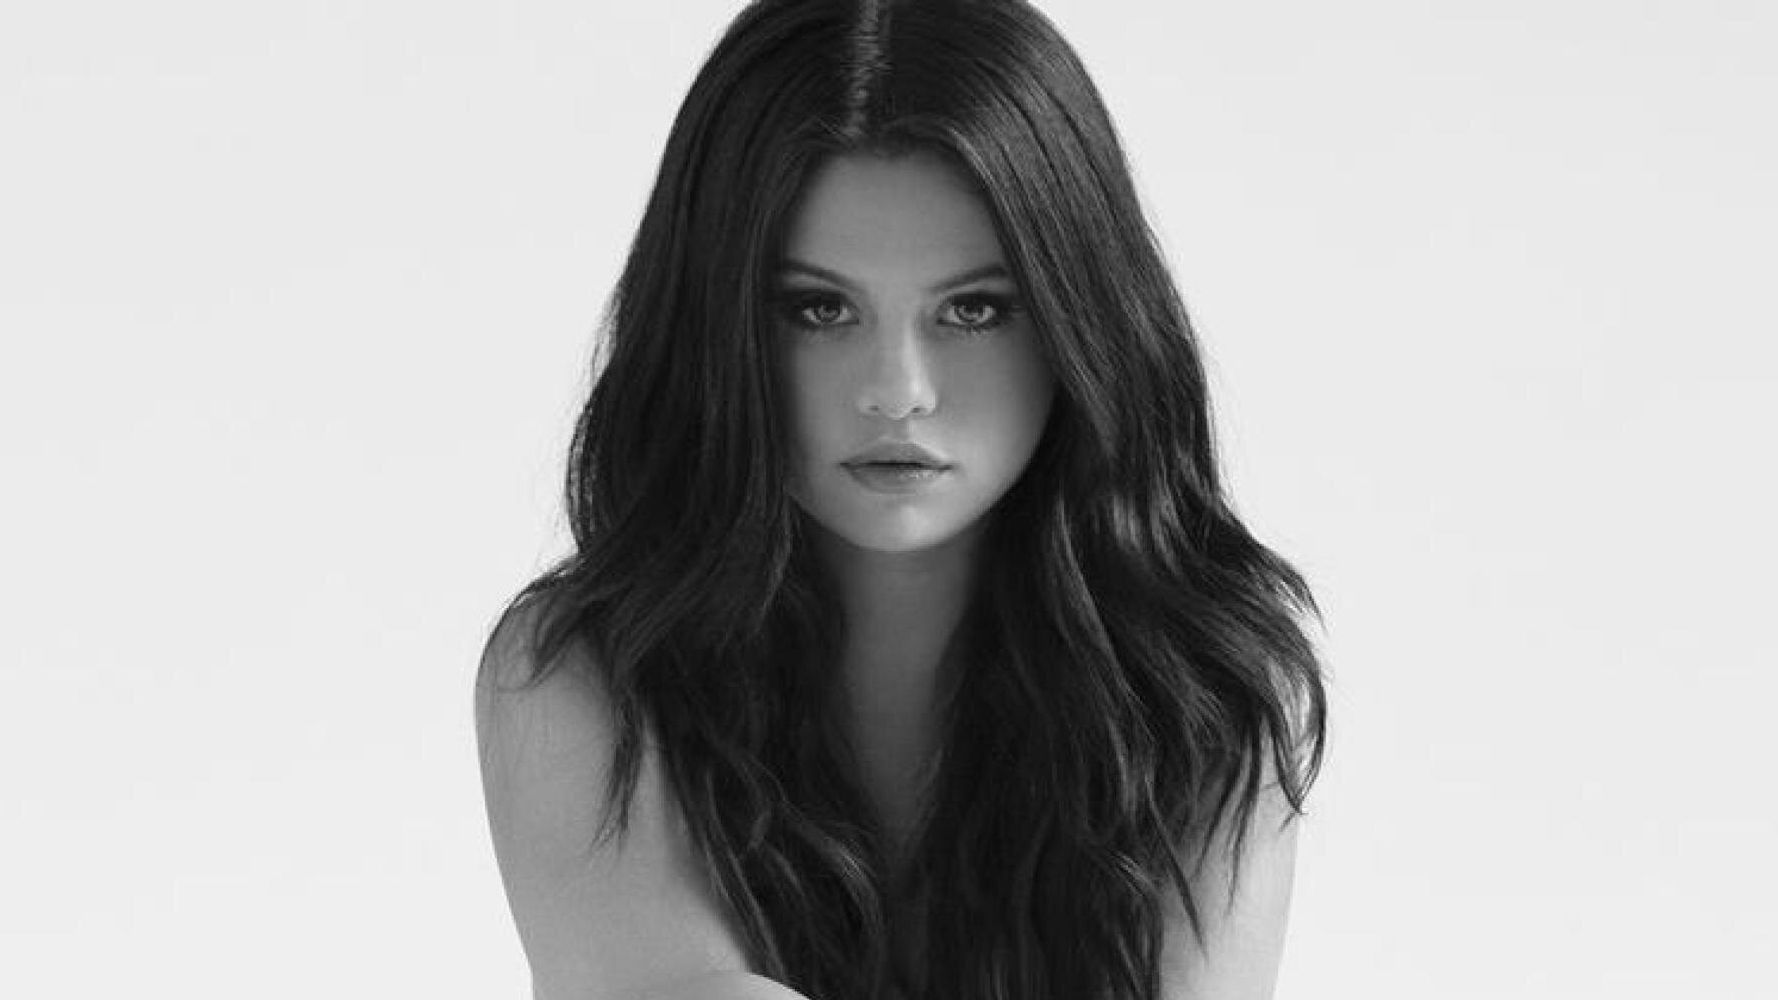 Selena Gomez Reveals Nude Album Cover For New Release Revival Pics Huffpost Uk Entertainment 0980